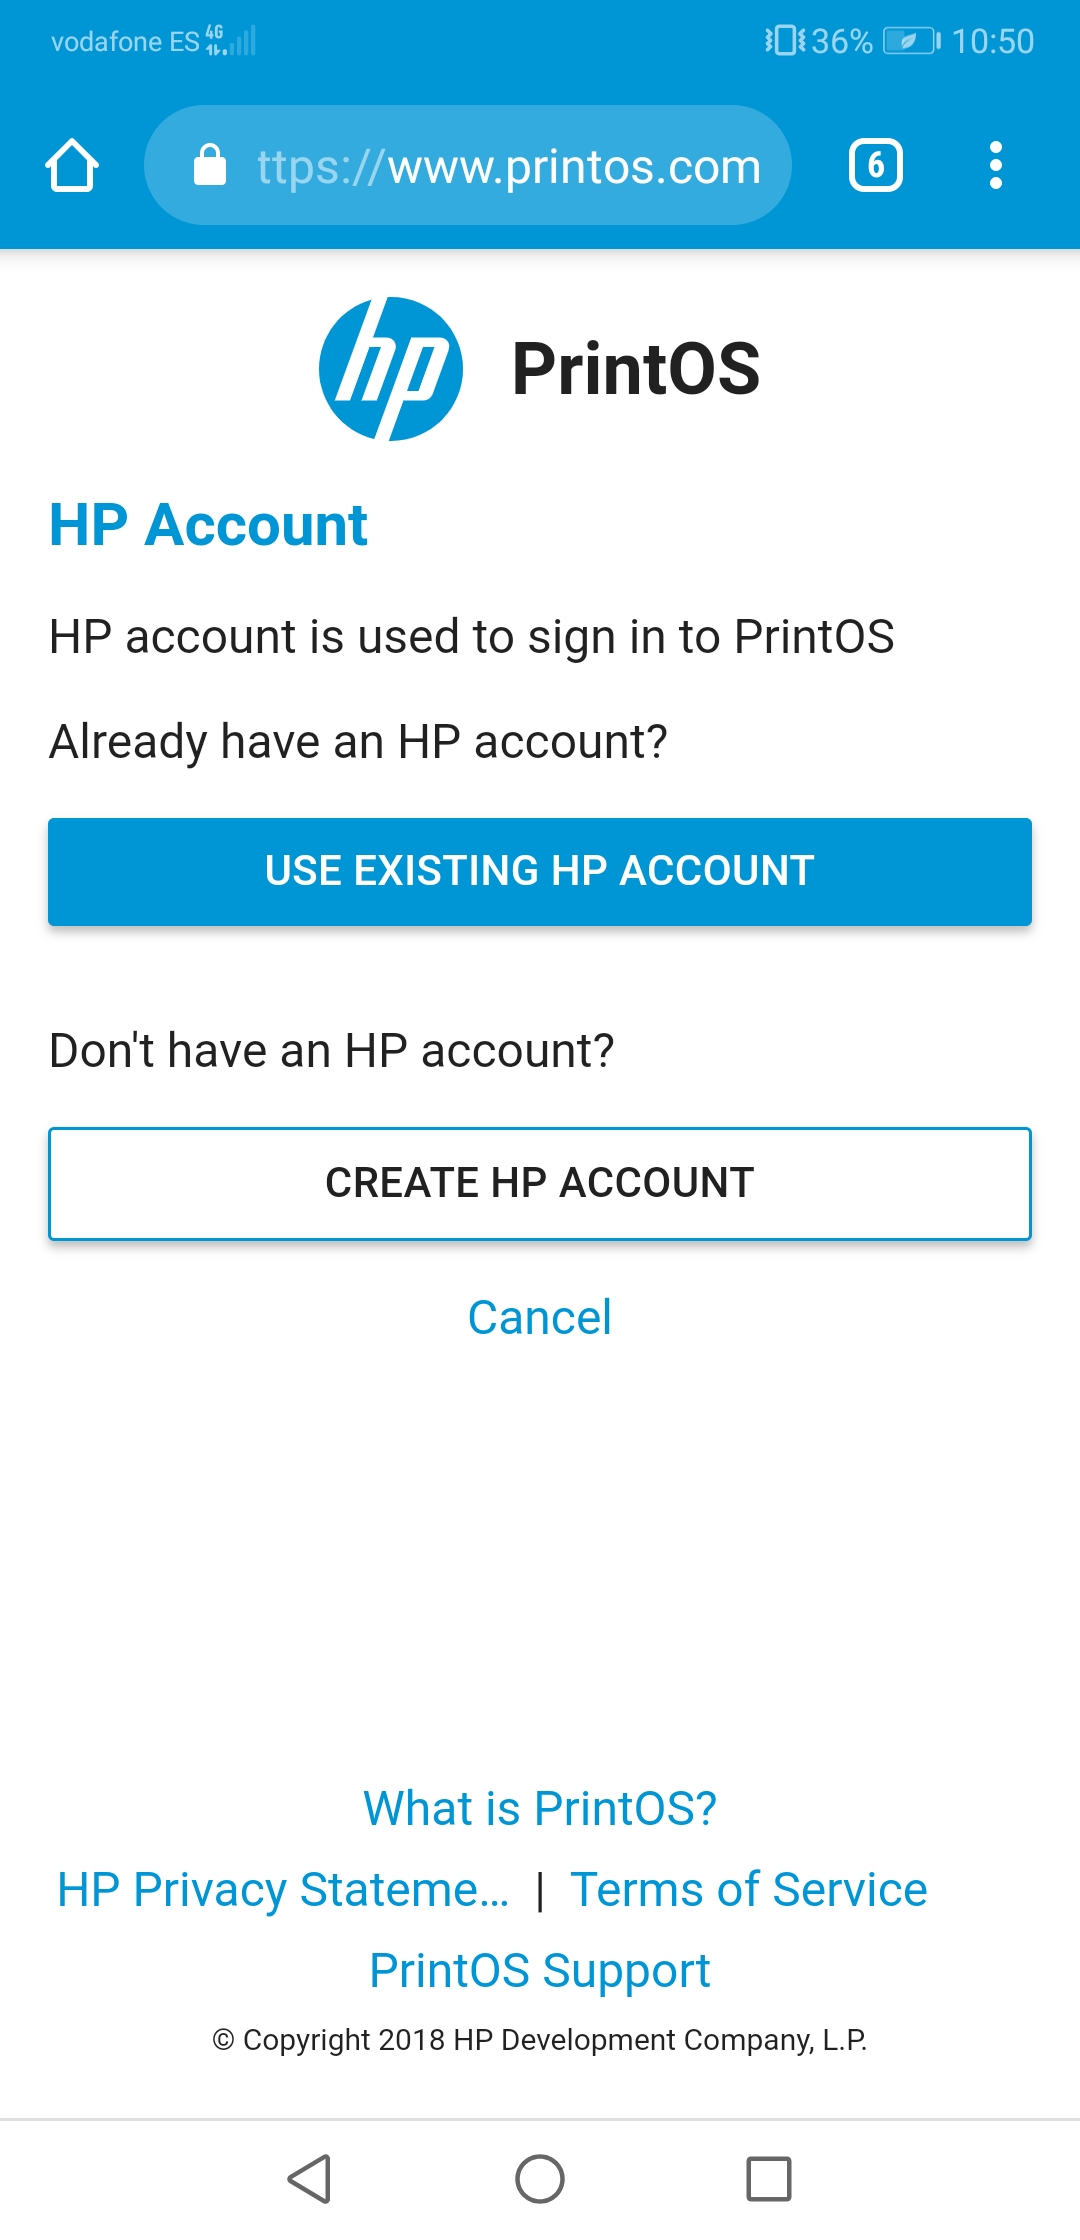 HP Latex PrintOS sign up account